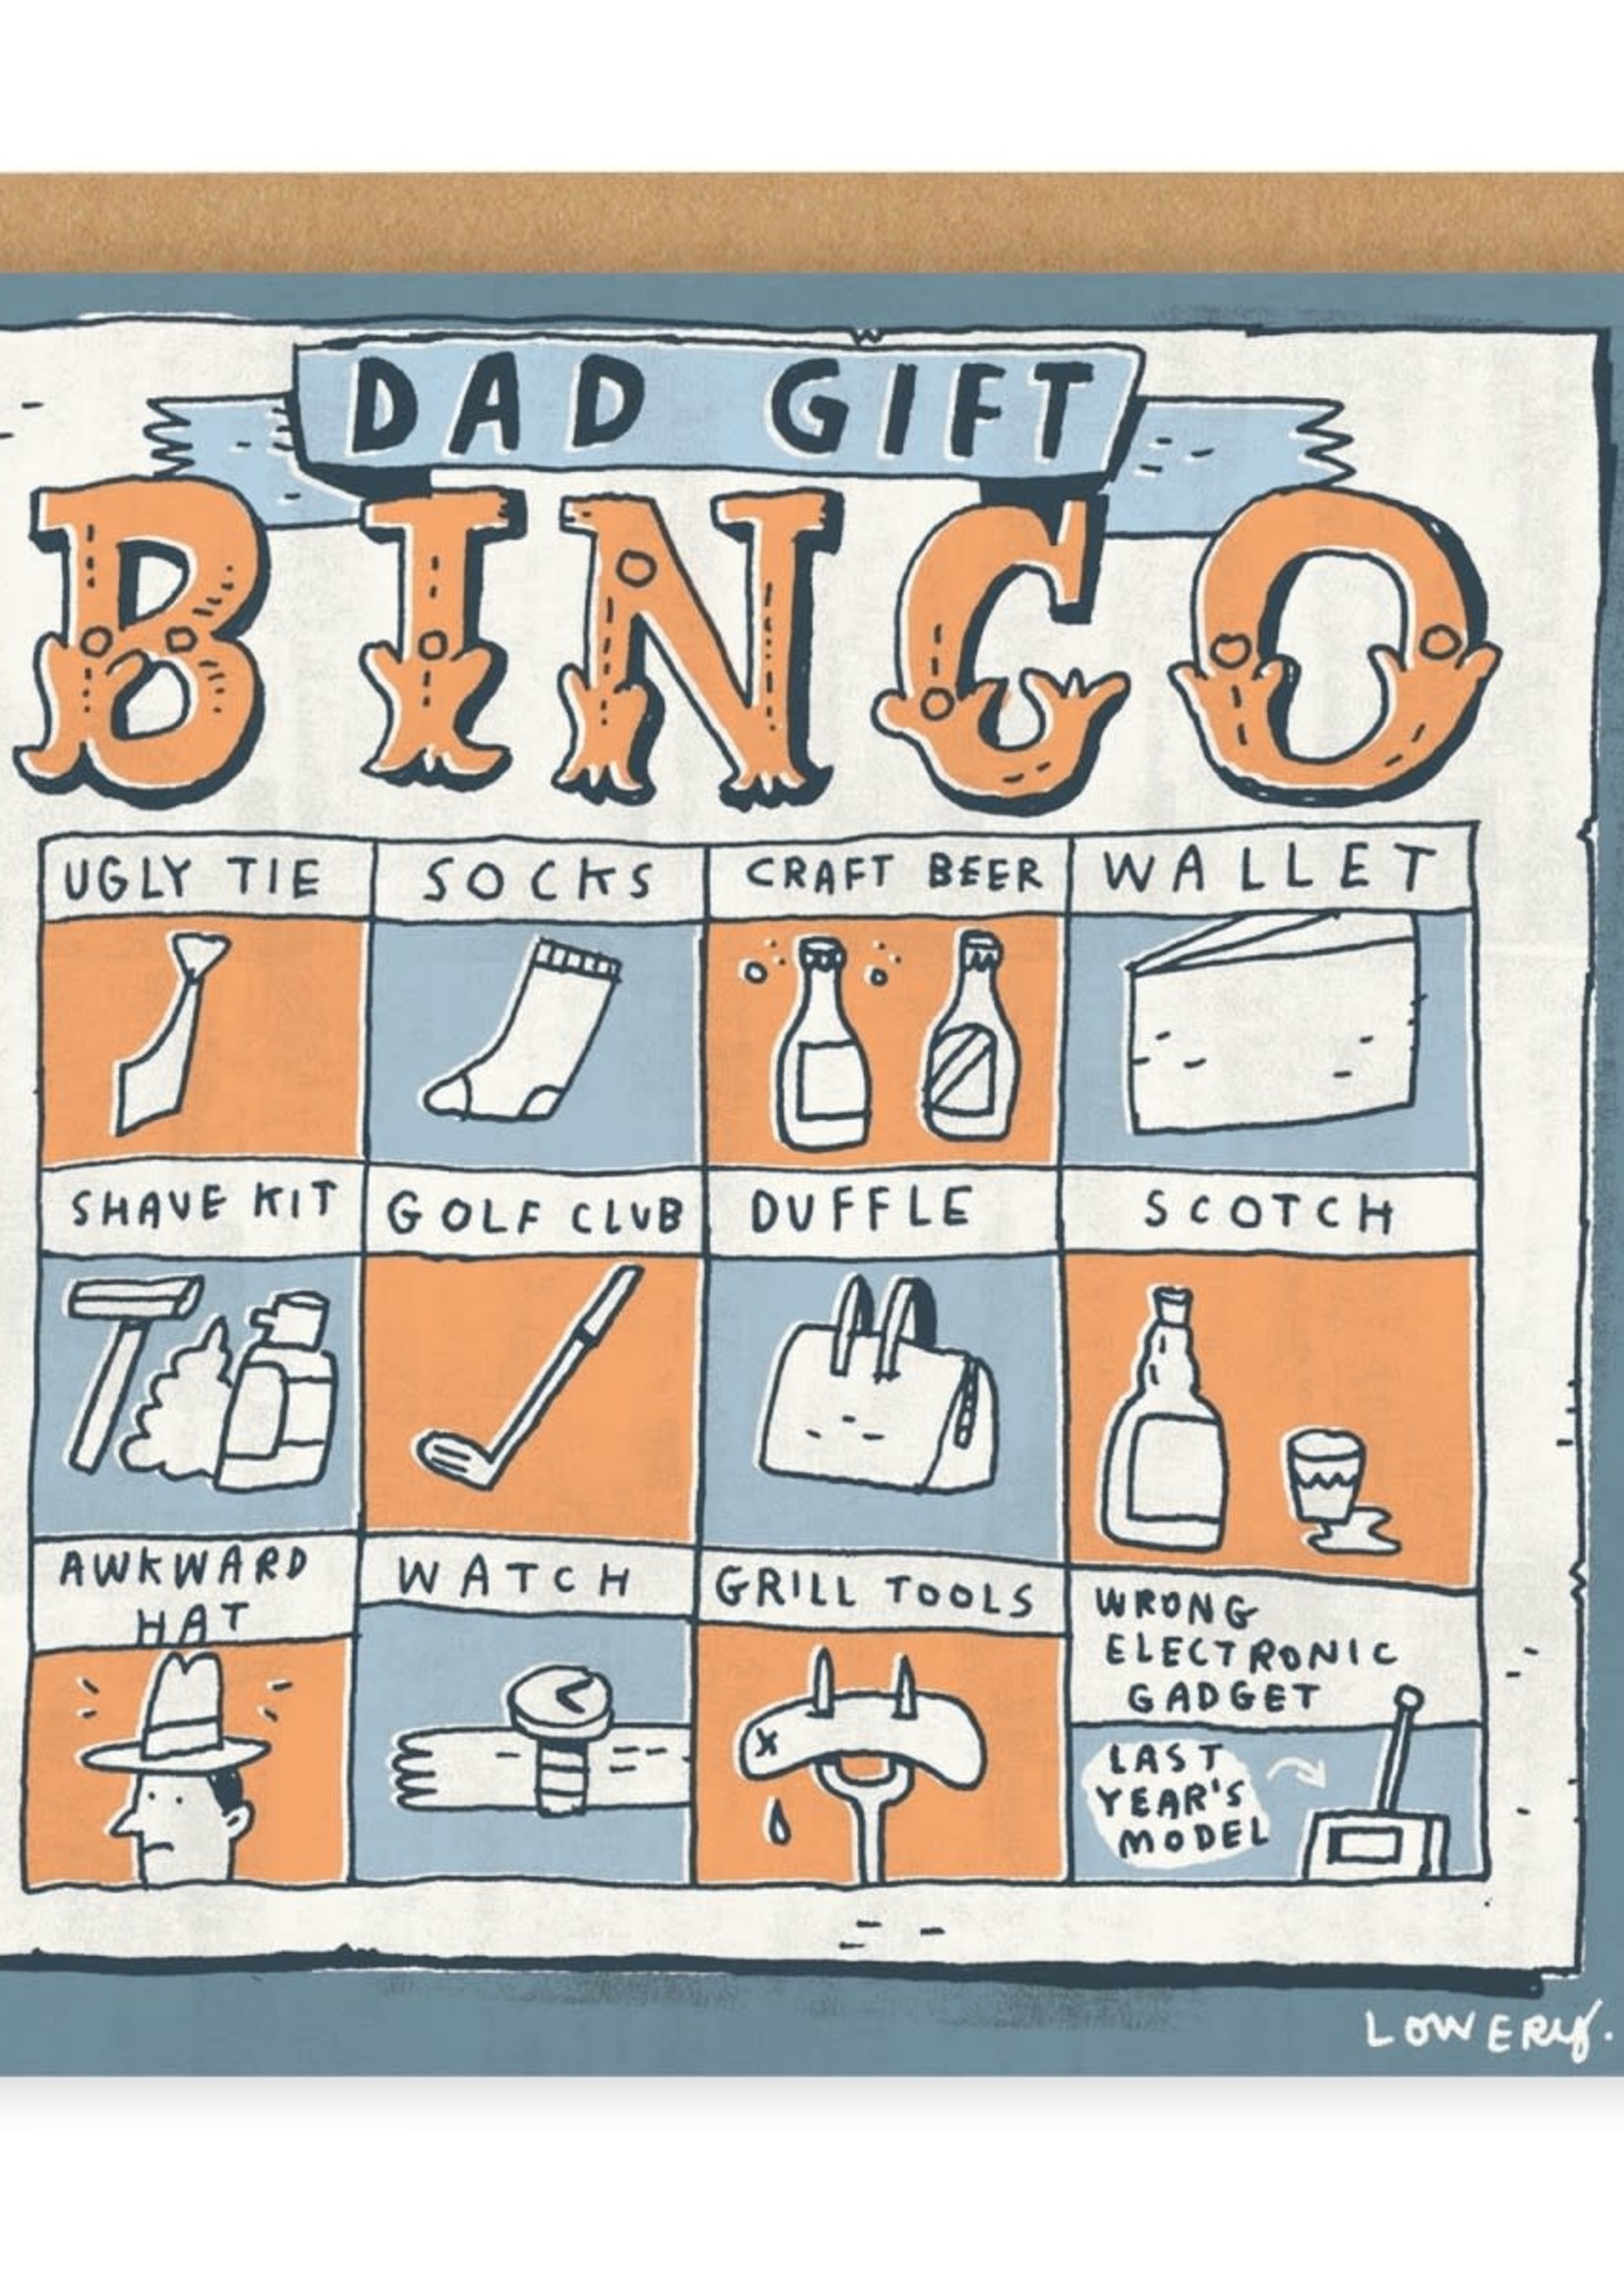 A Perry & Co Ltd Dad Gift Bingo Greetings Card